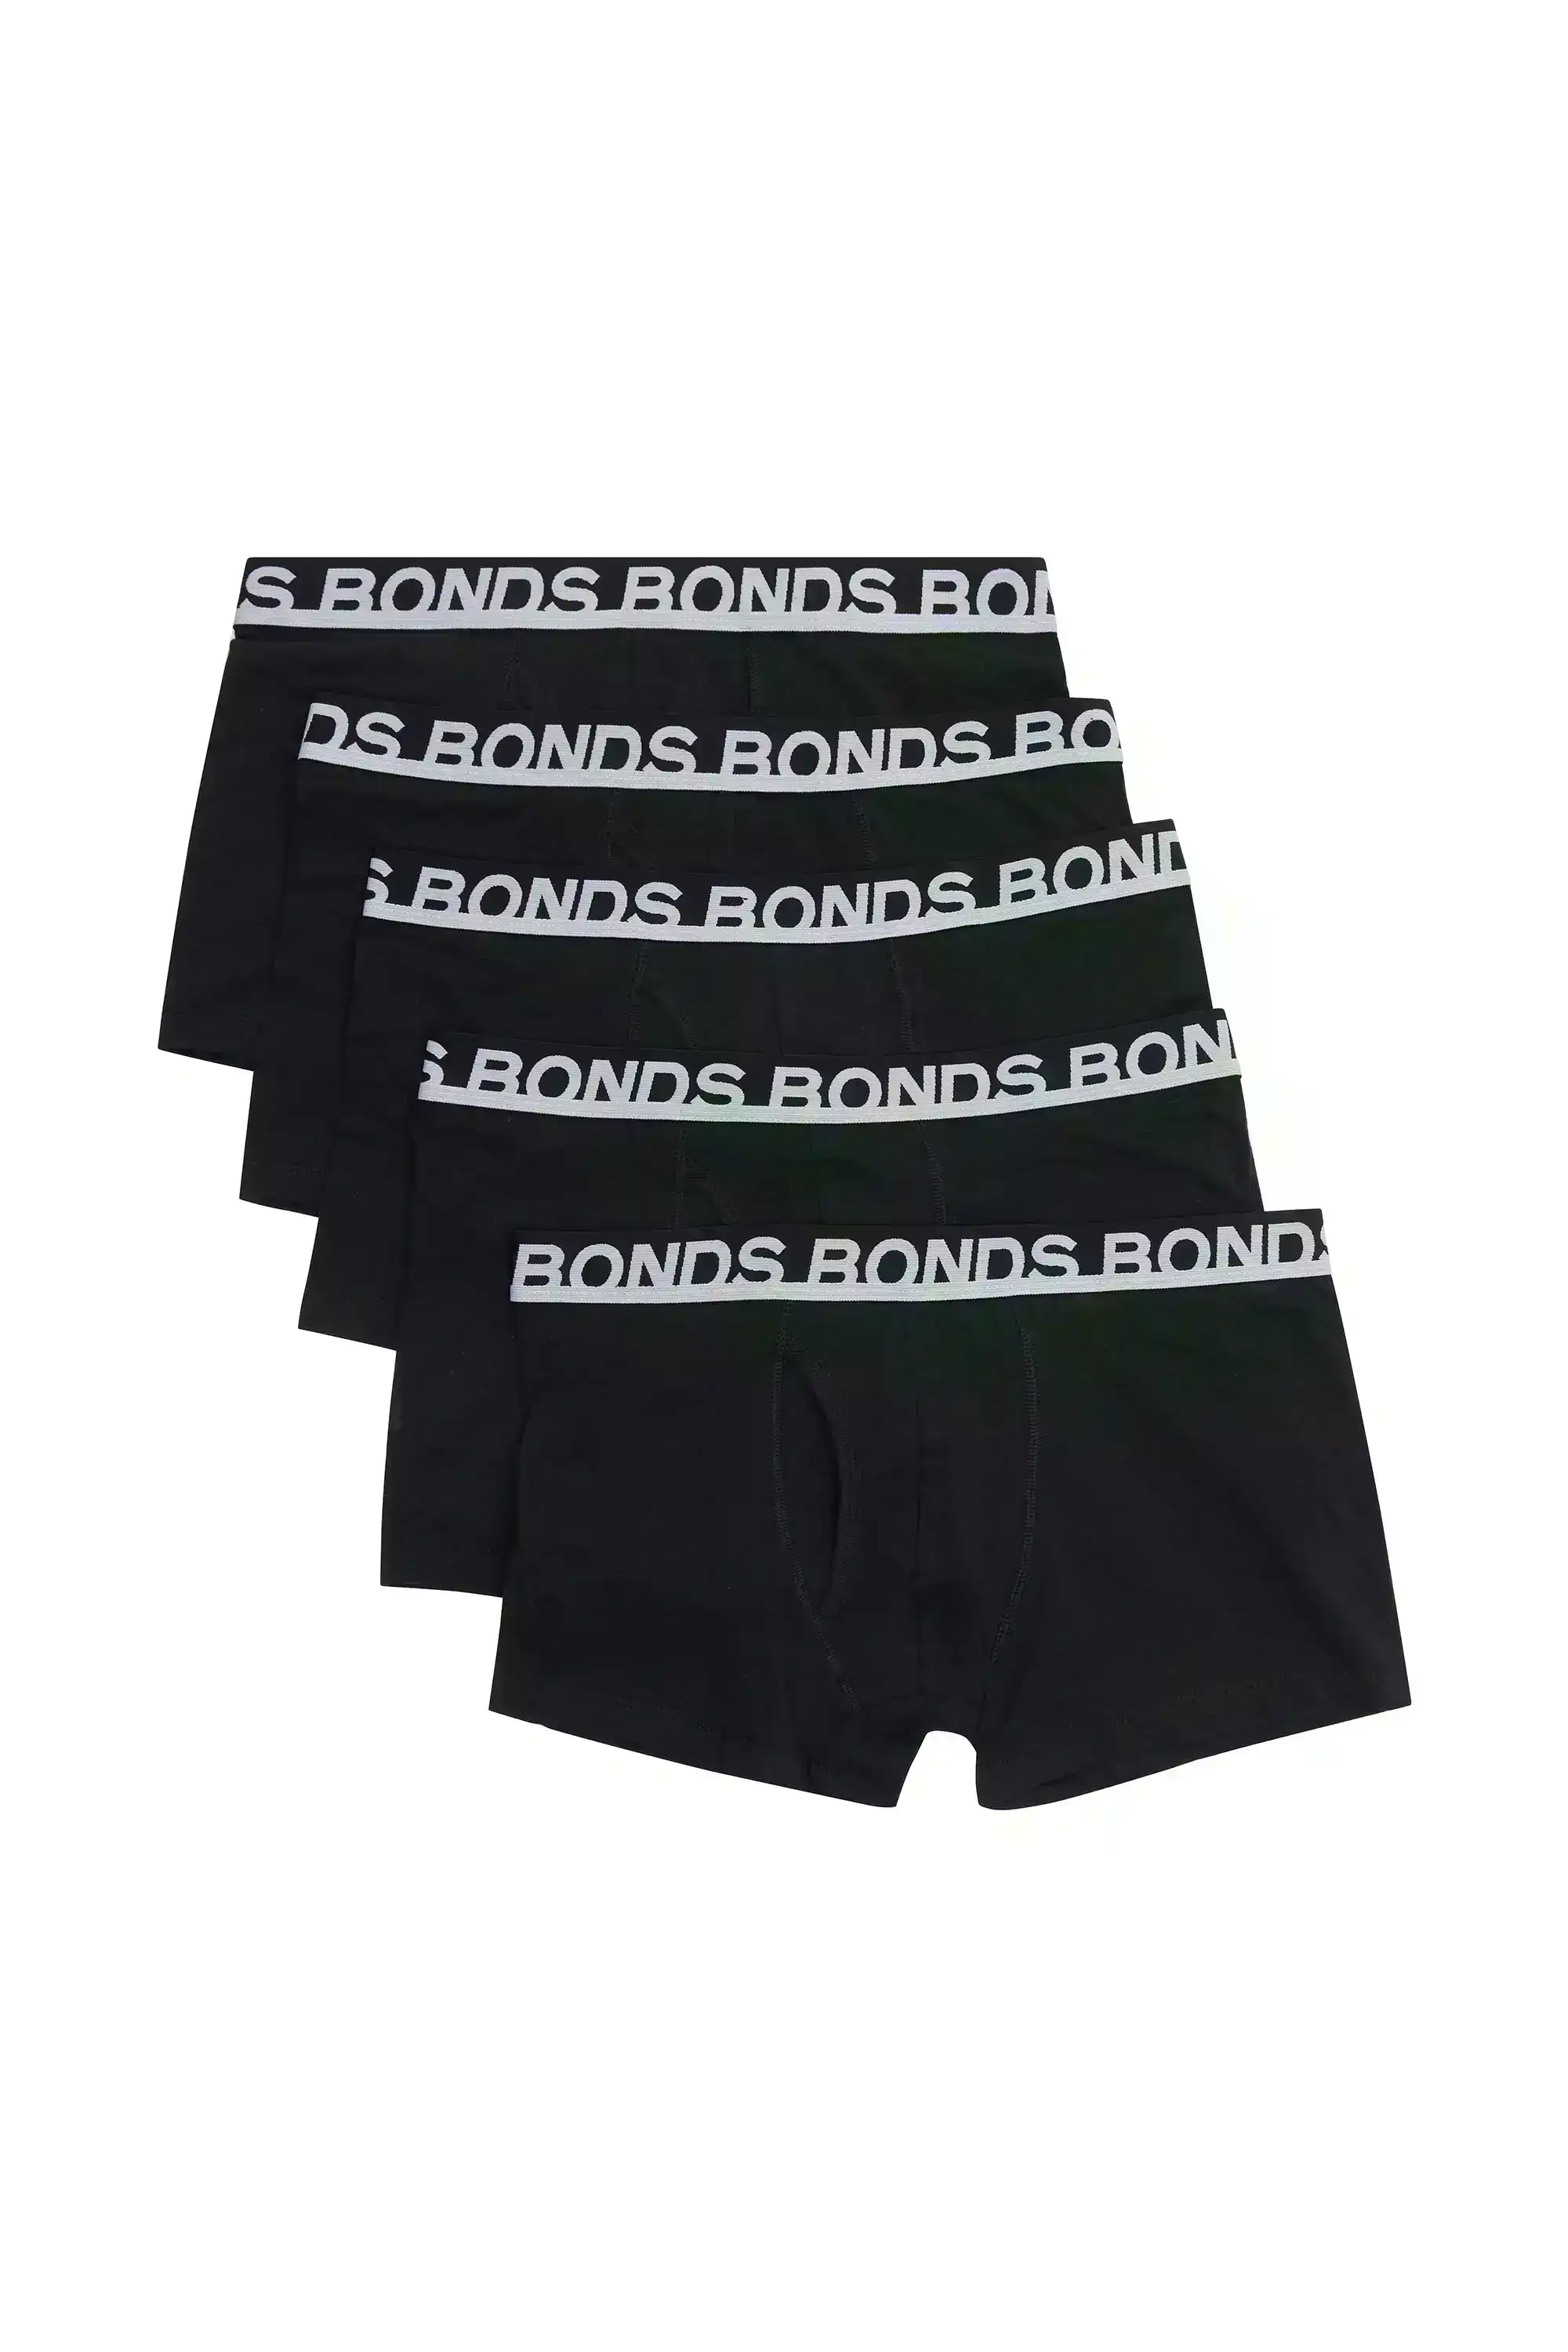 15 X Bonds Mens Everyday Trunks Underwear Black